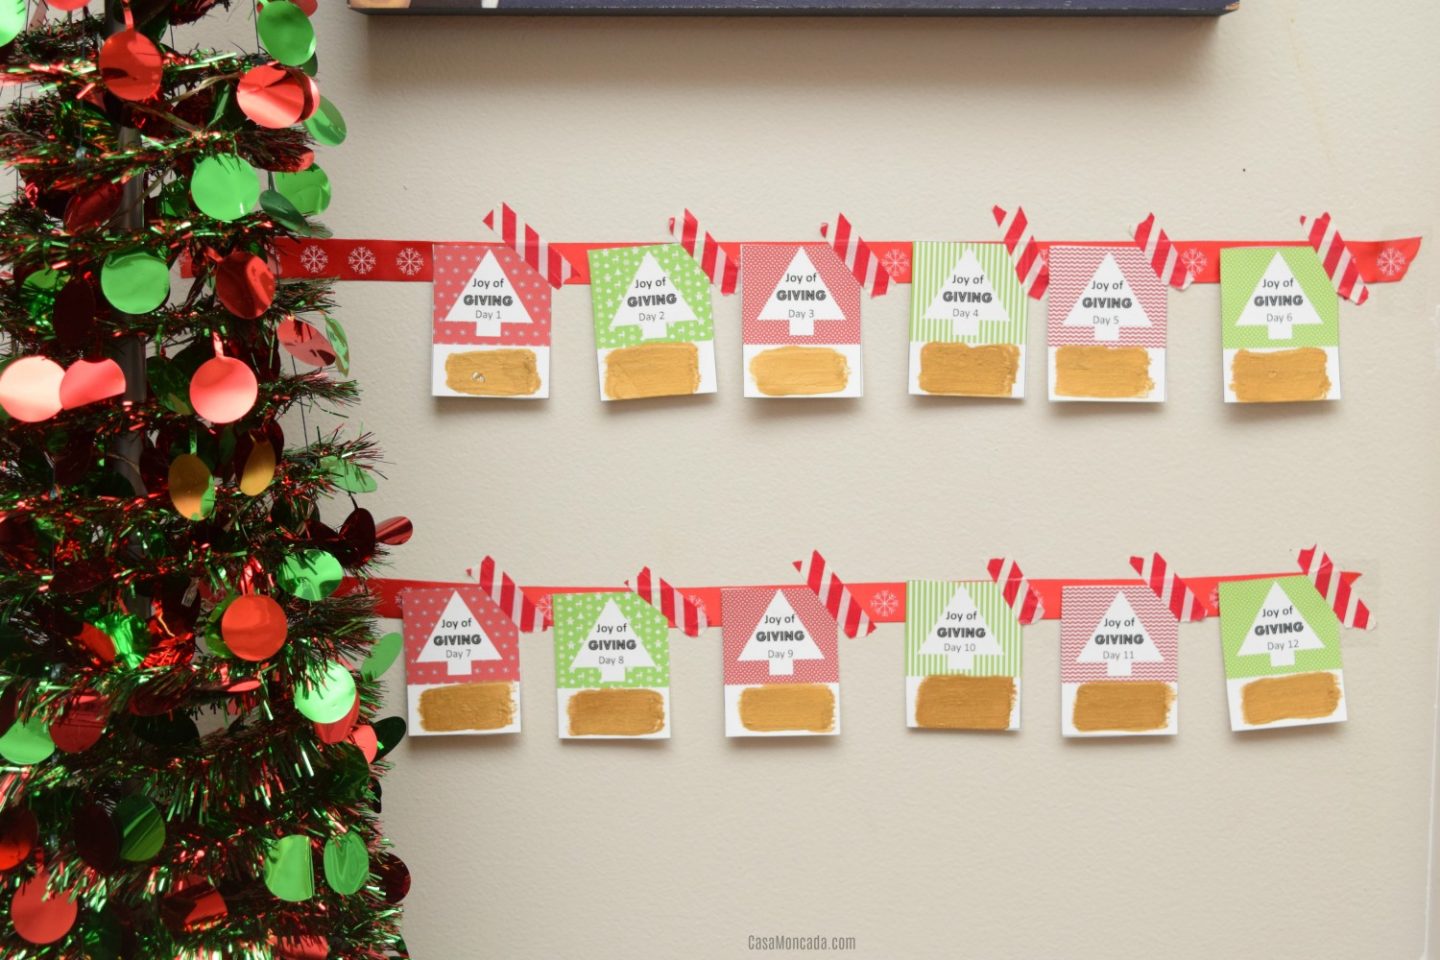 Joy of Giving Advent Calendar ScratchOff Cards SprinkleDIY